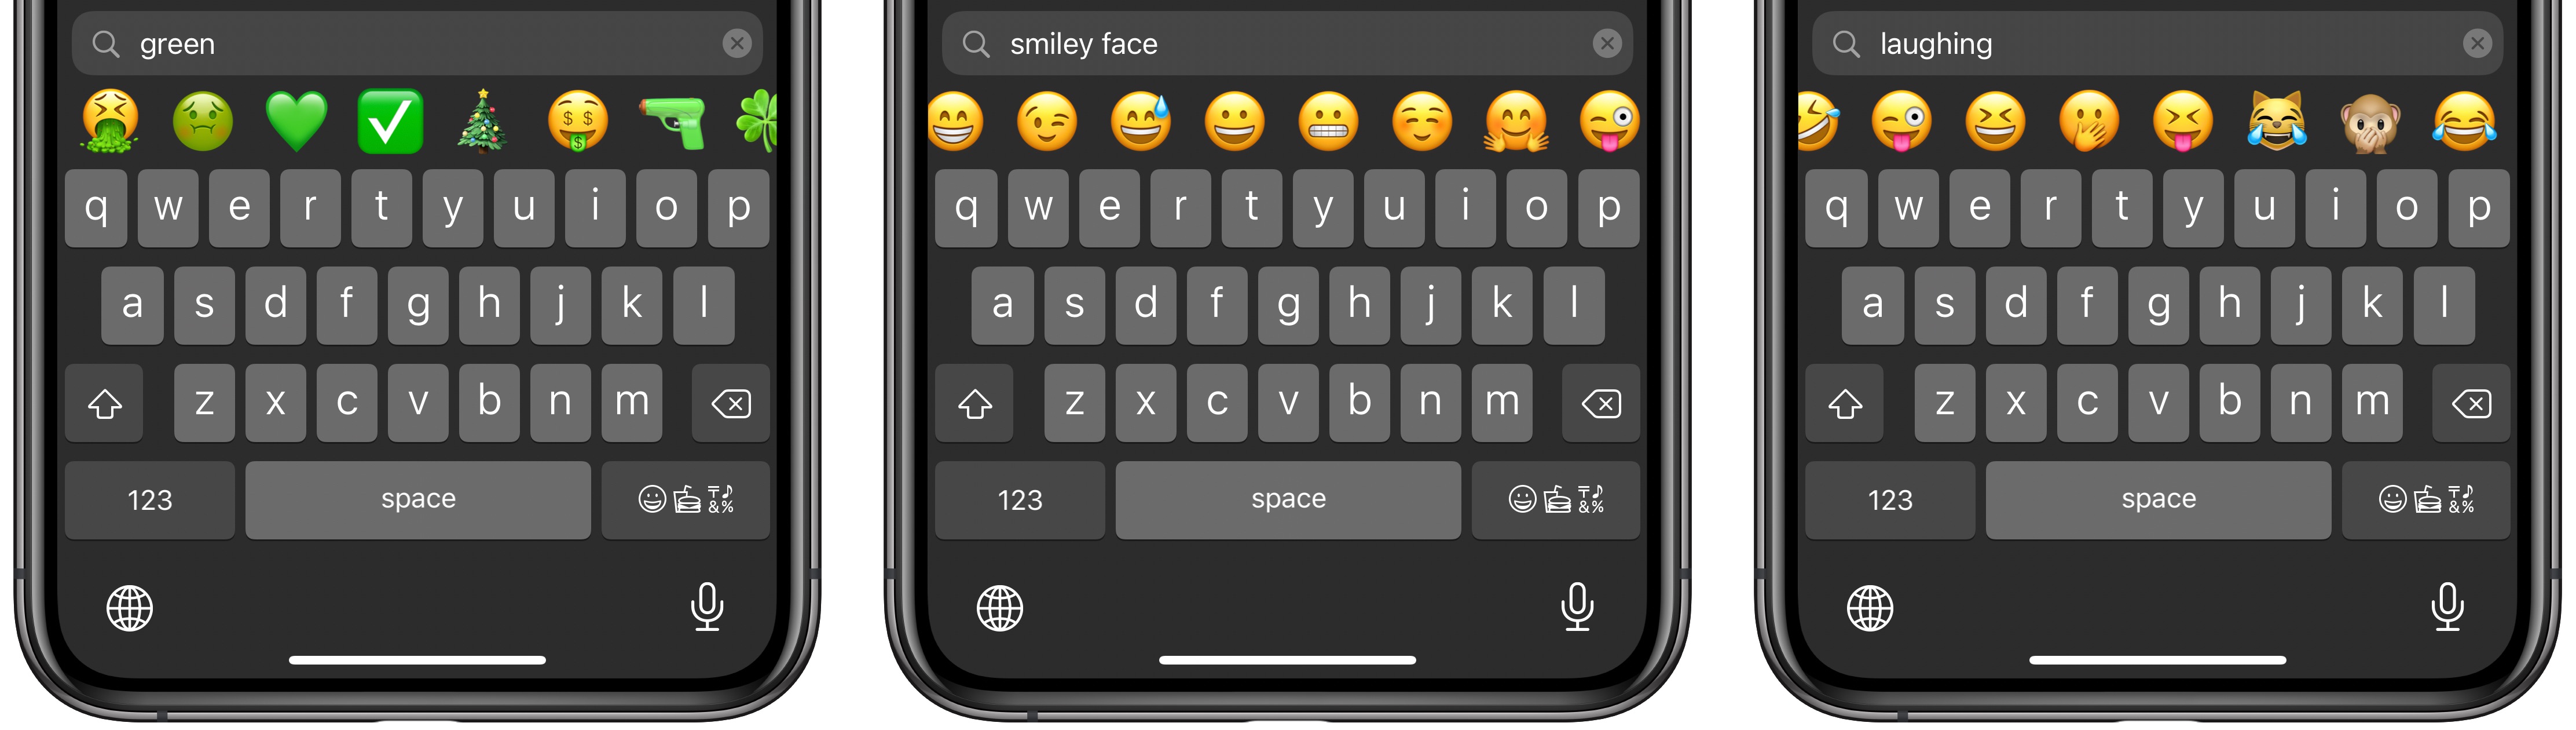 iPhone emoji search screenshot